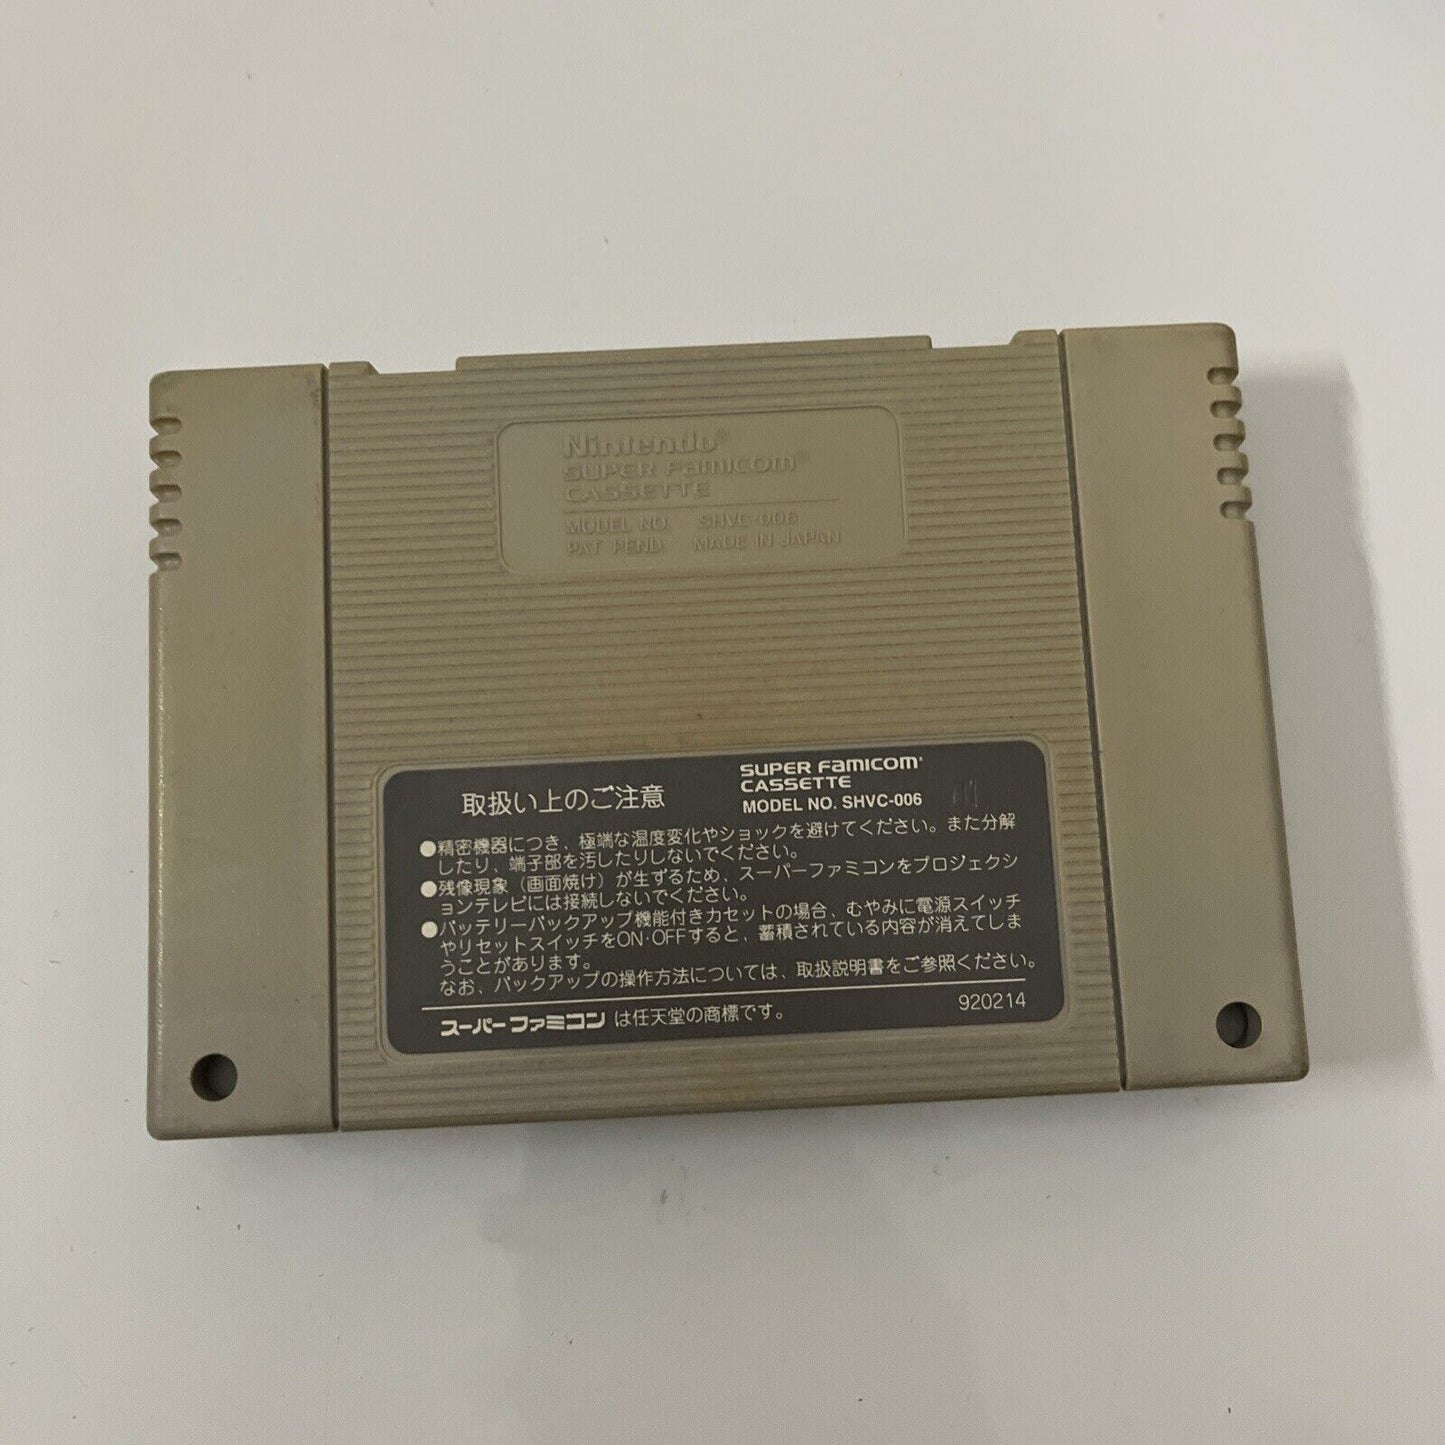 Super Street Fighter 2 + Turbo - Nintendo Super Famicom SNES NTSC-J JAPAN Game